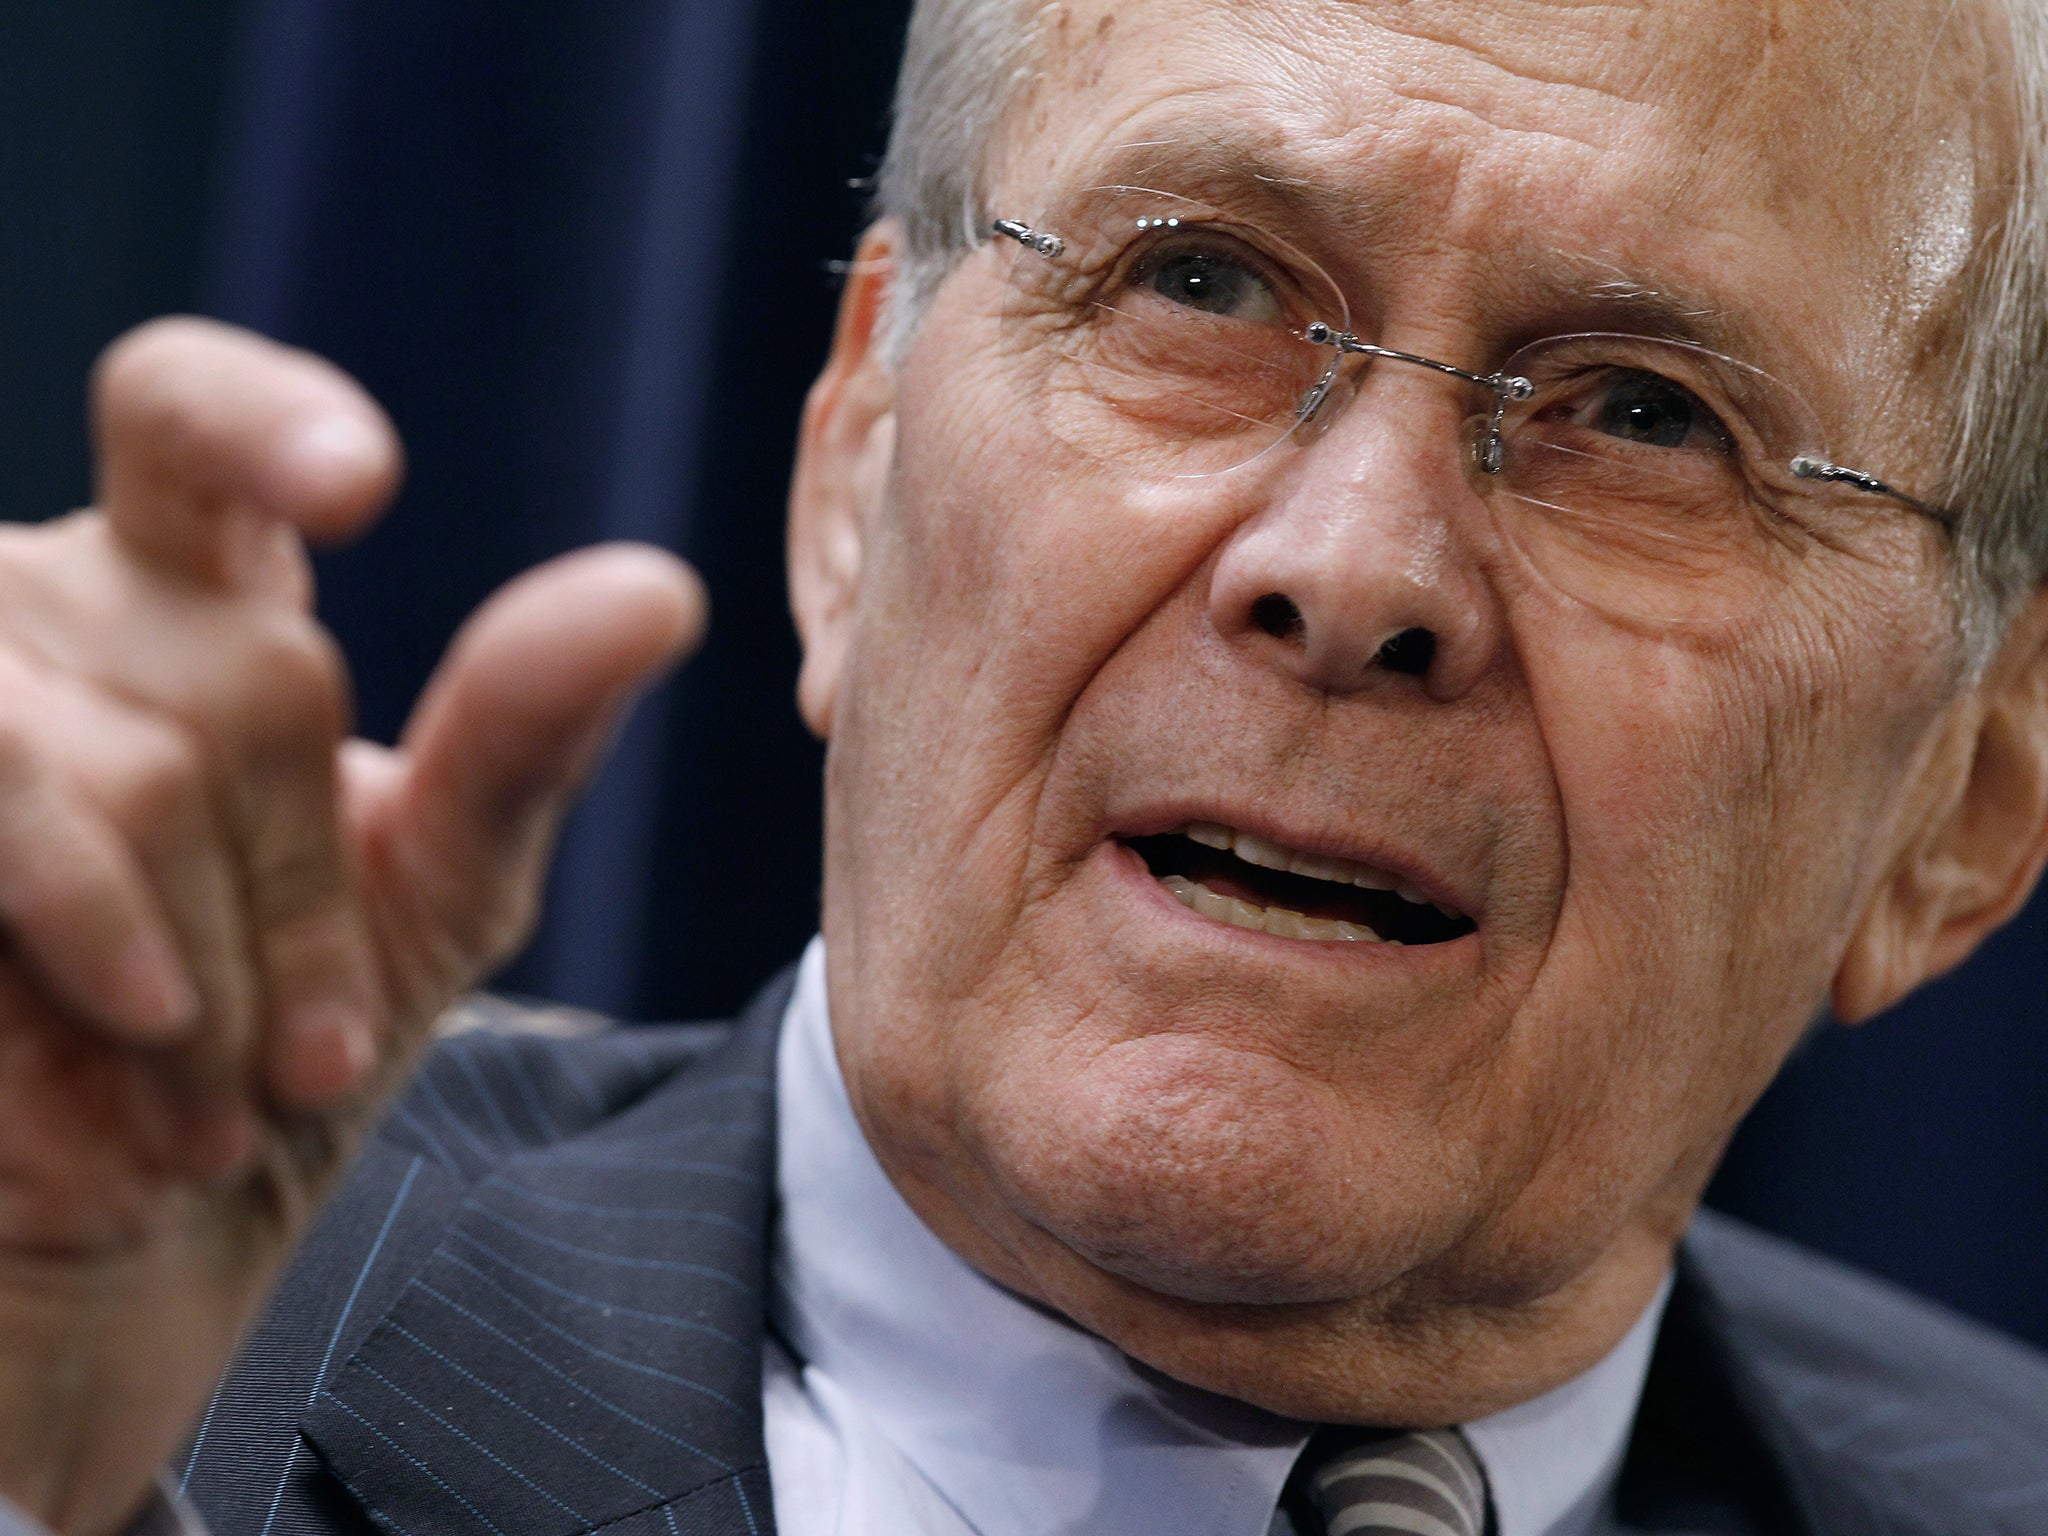 Donald Rumsfeld also spoke about Libya